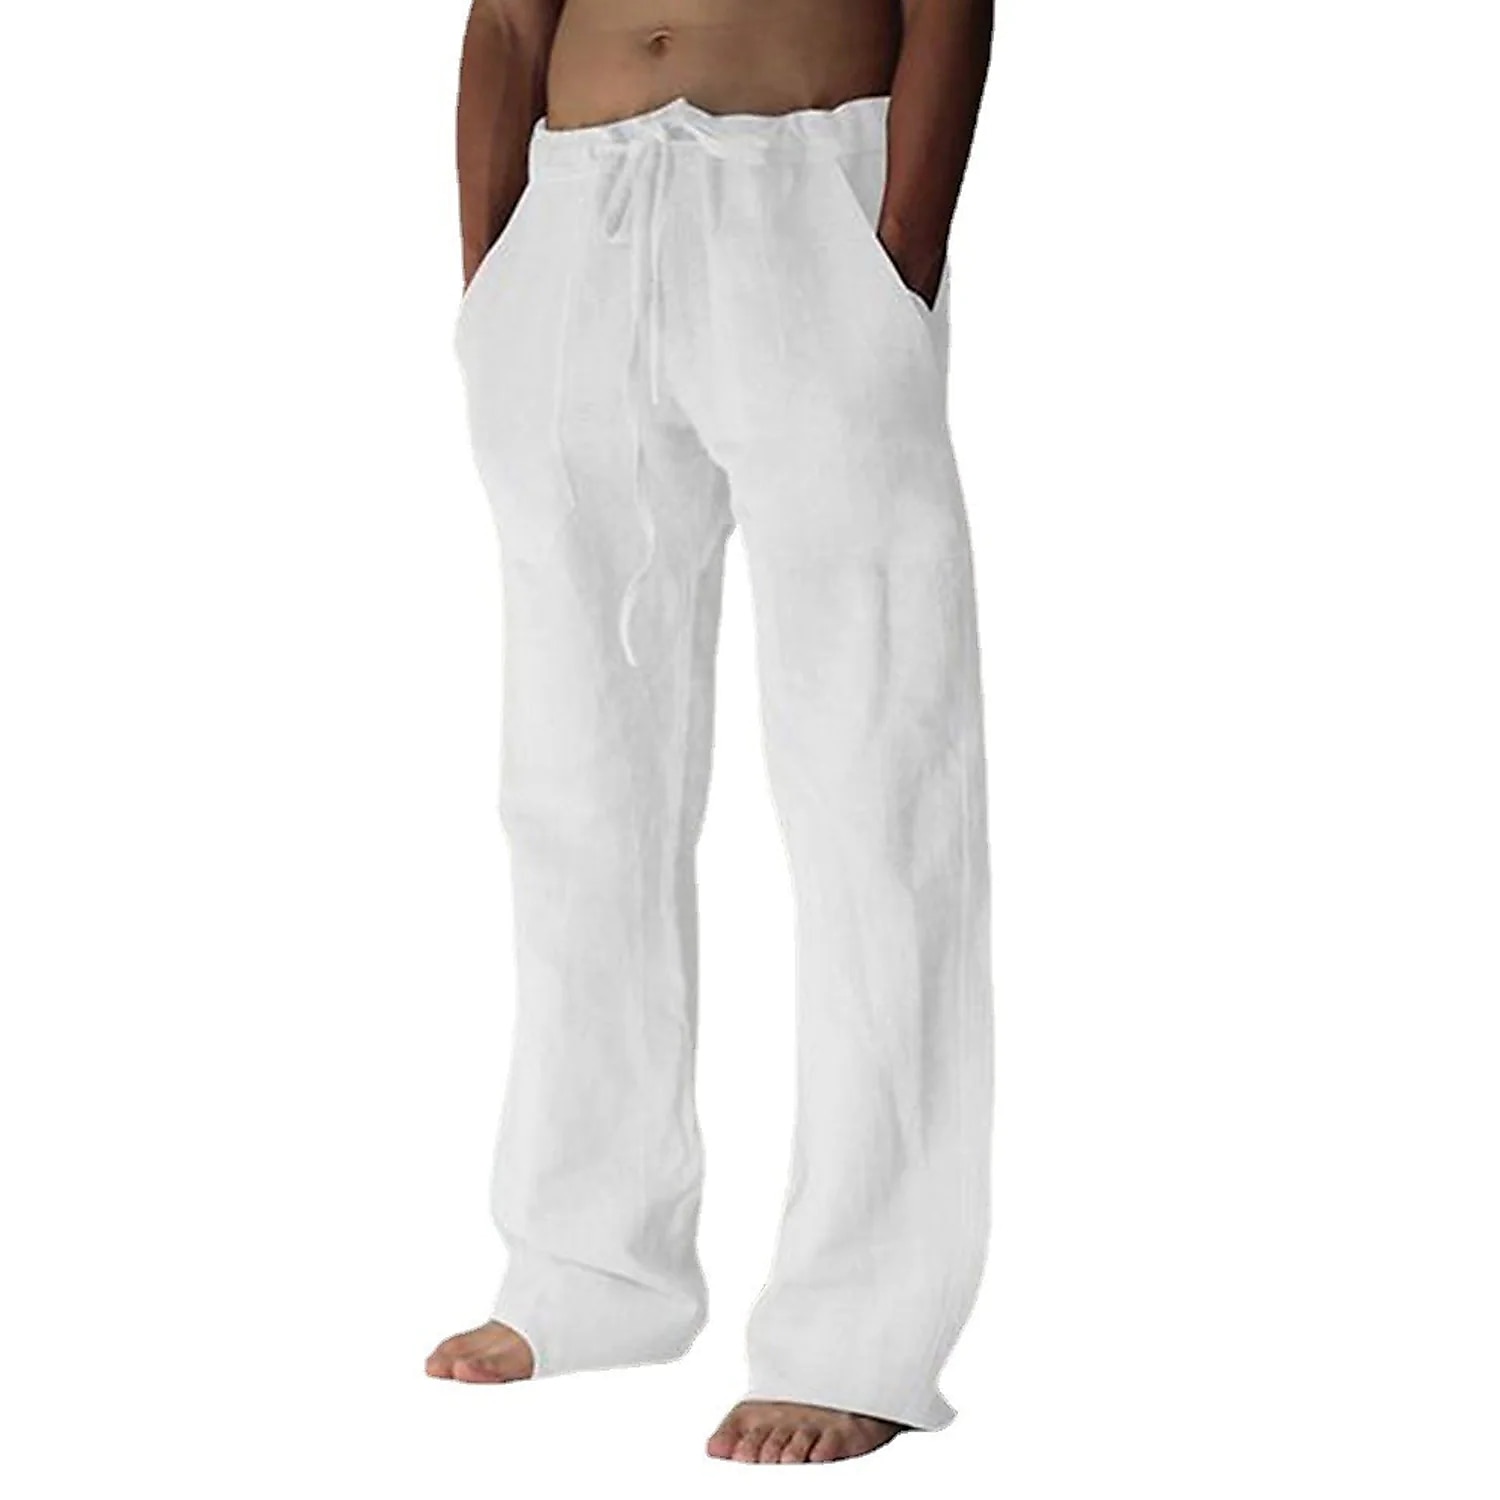 Men's Linen Pants Trousers Summer Pants Pocket Drawstring Plain